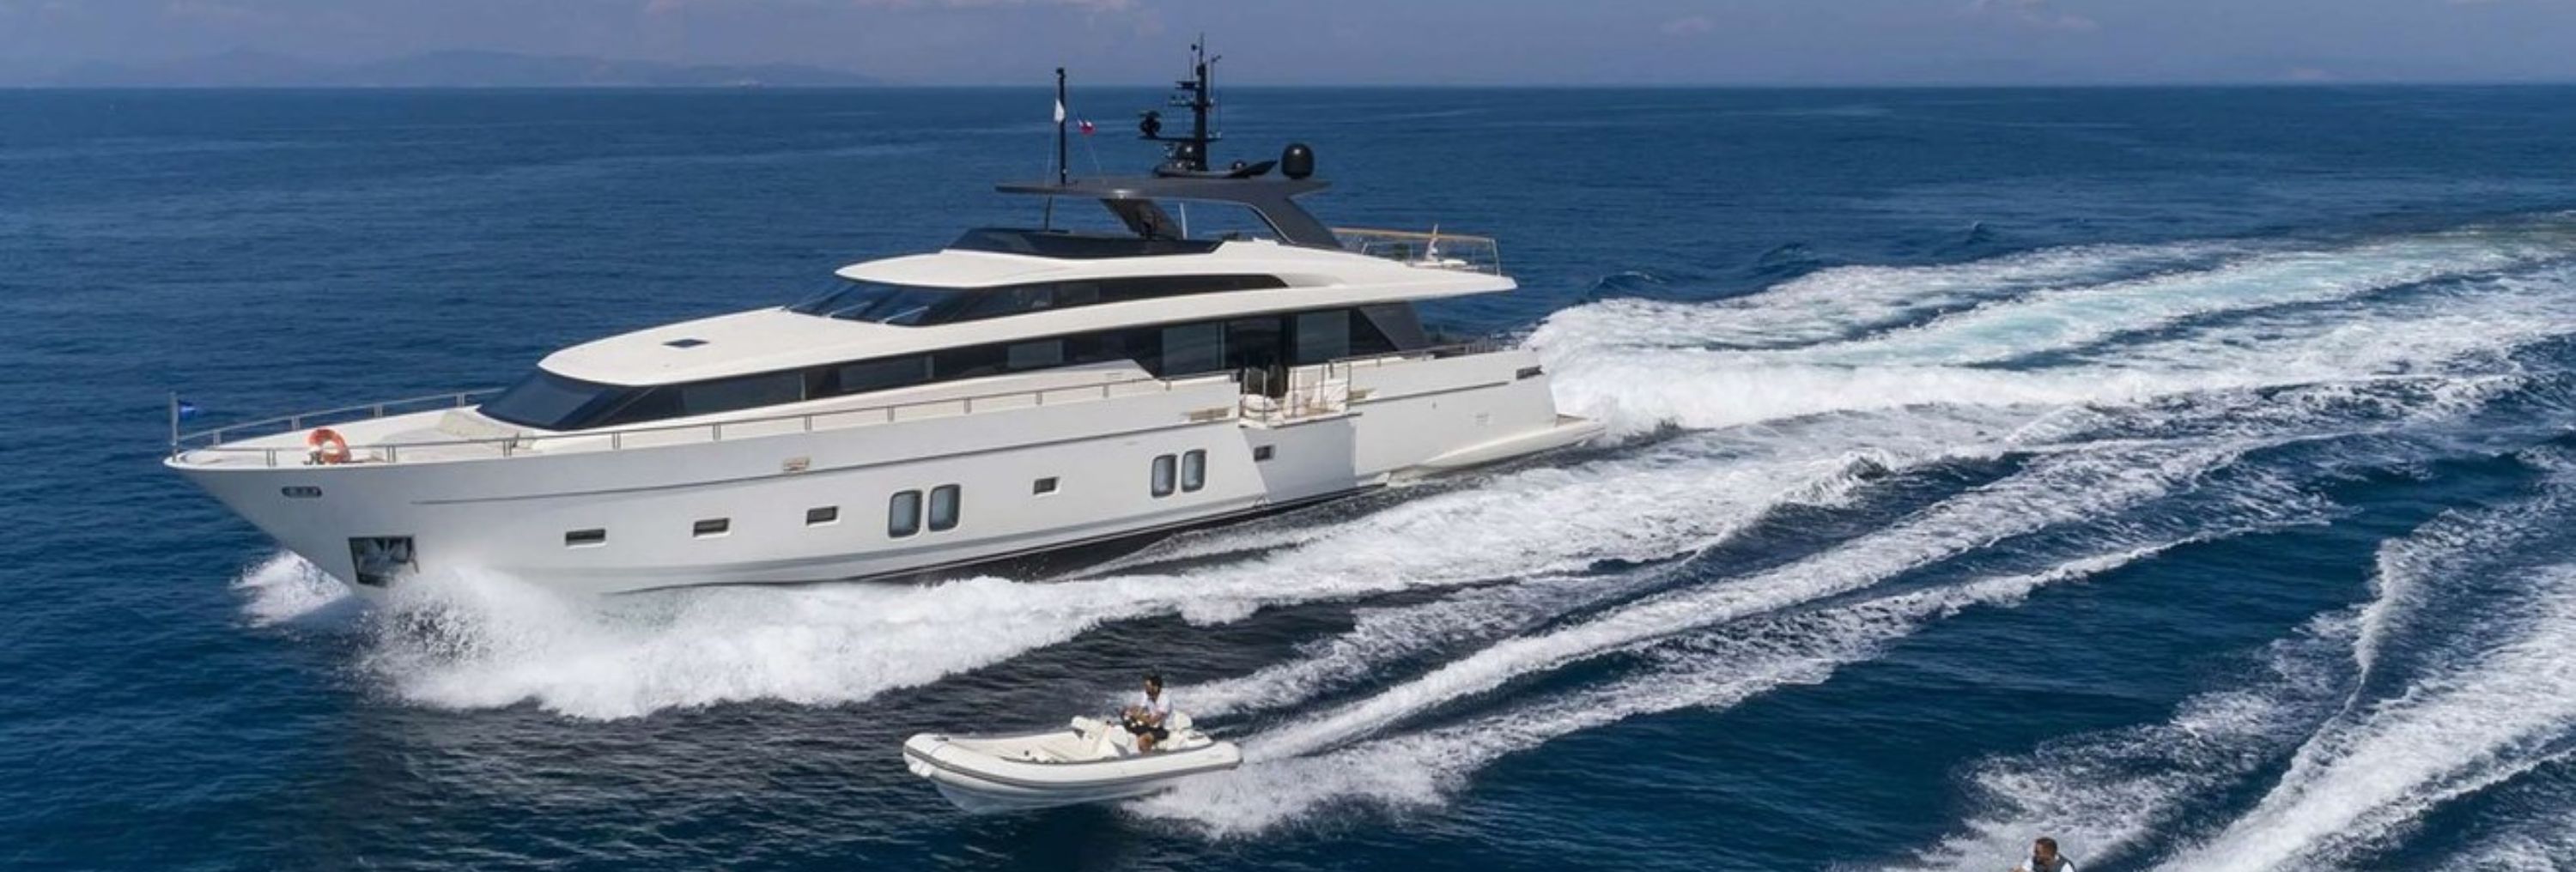 DINAIA: New Motor Yacht available for sale